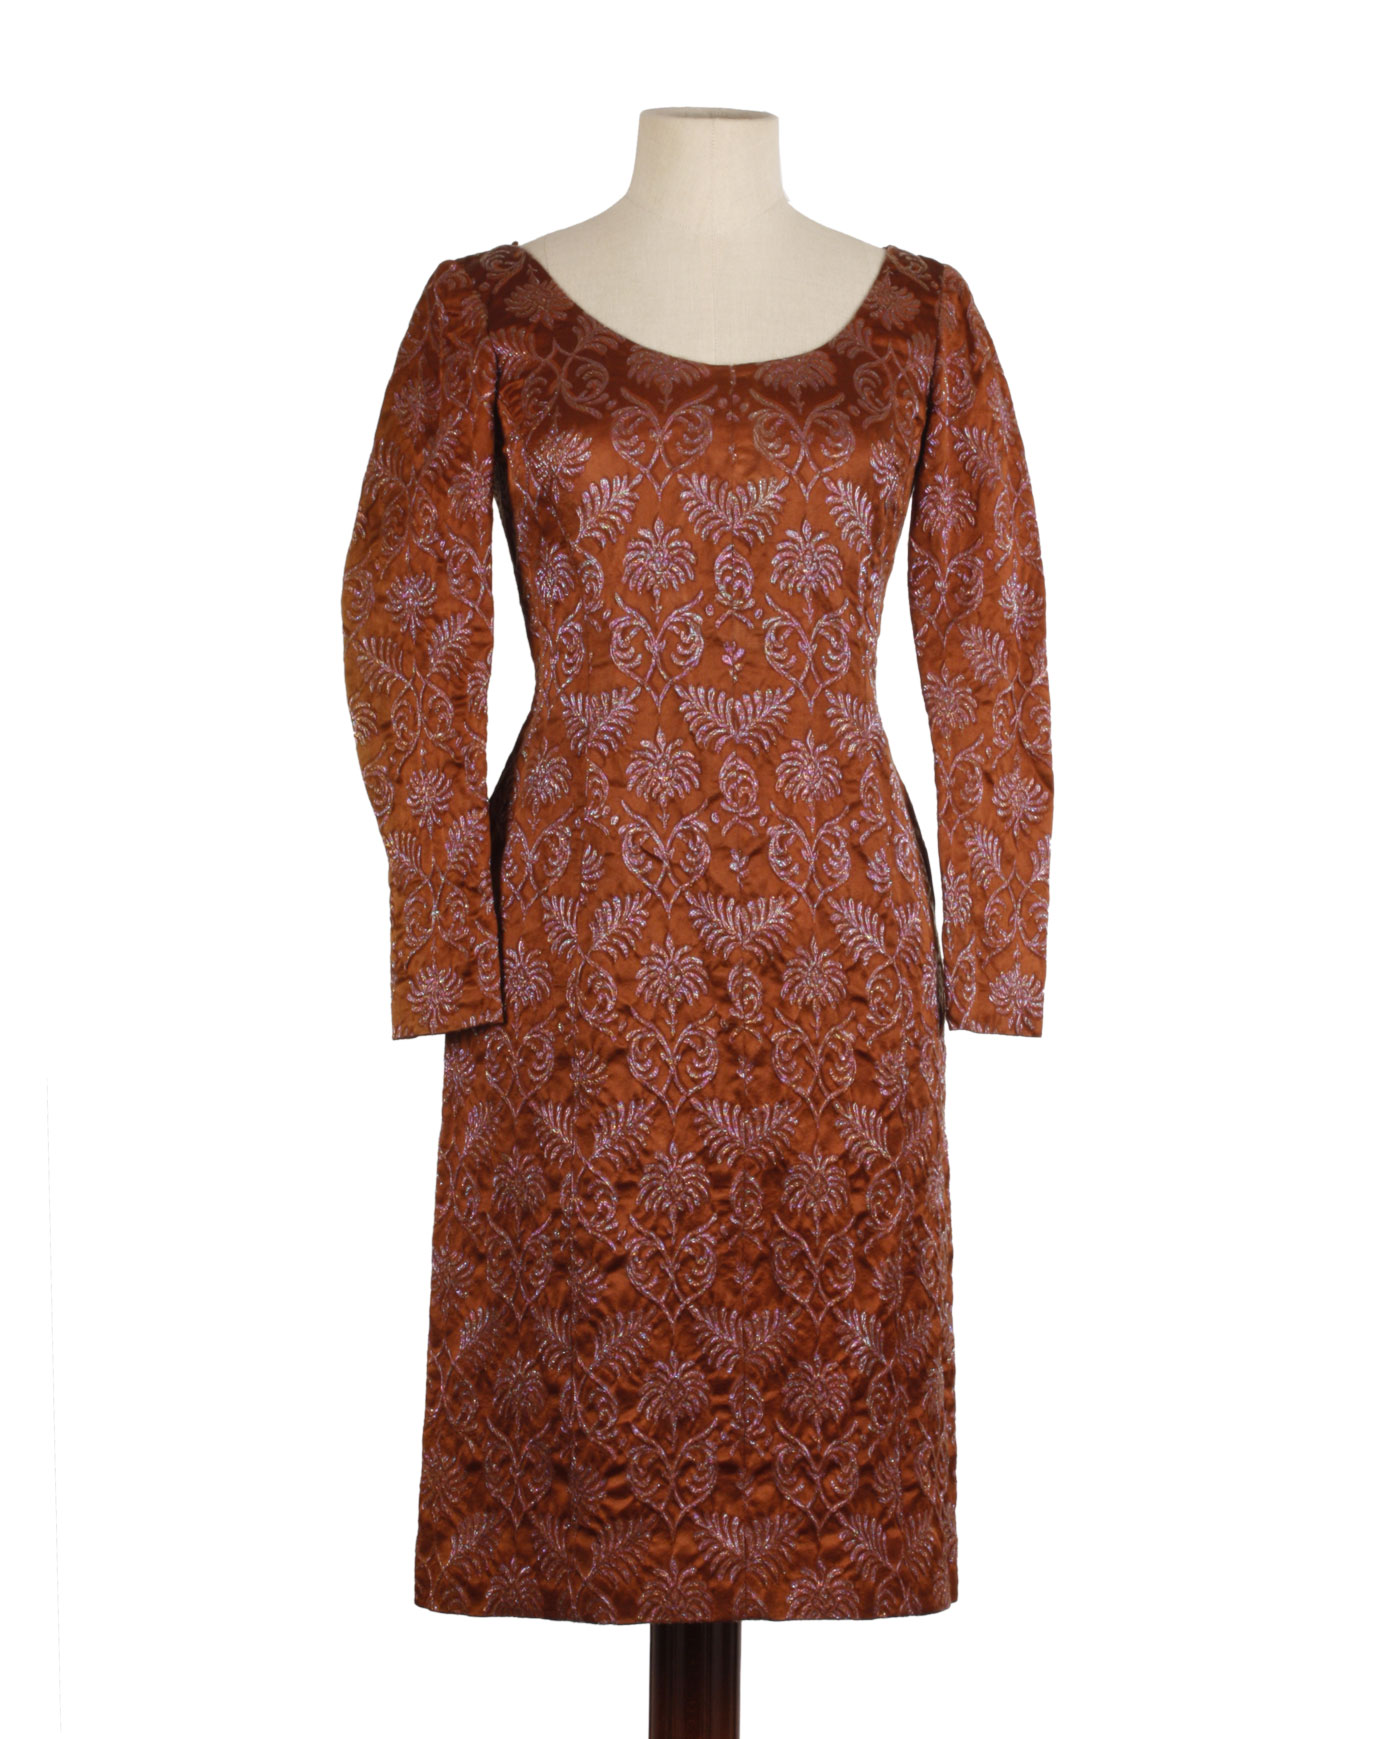 Brocade dress '70s